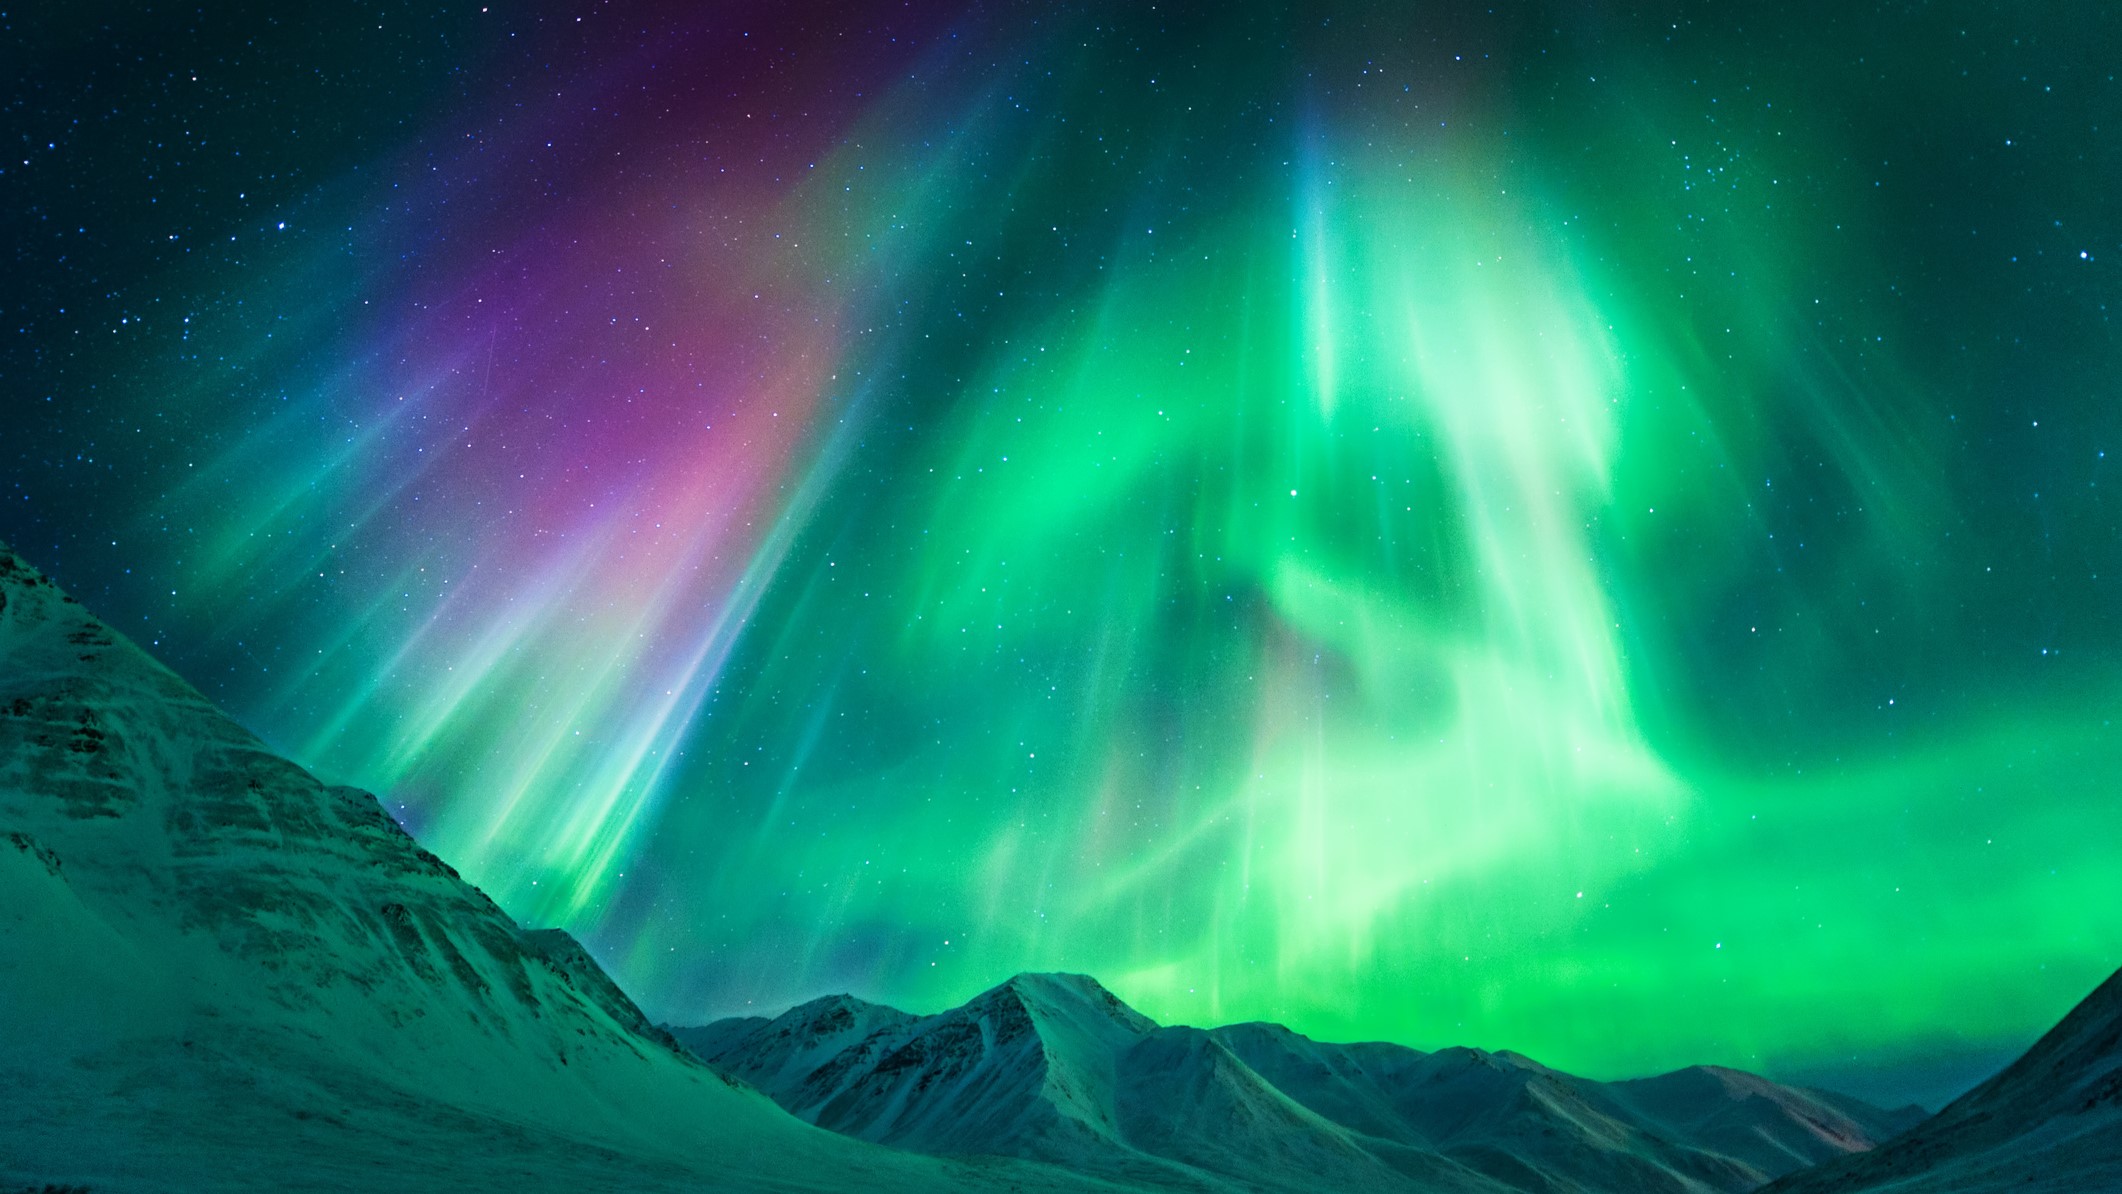 Aurora borealis, Iceland - Stock Image - C024/8597 - Science Photo Library